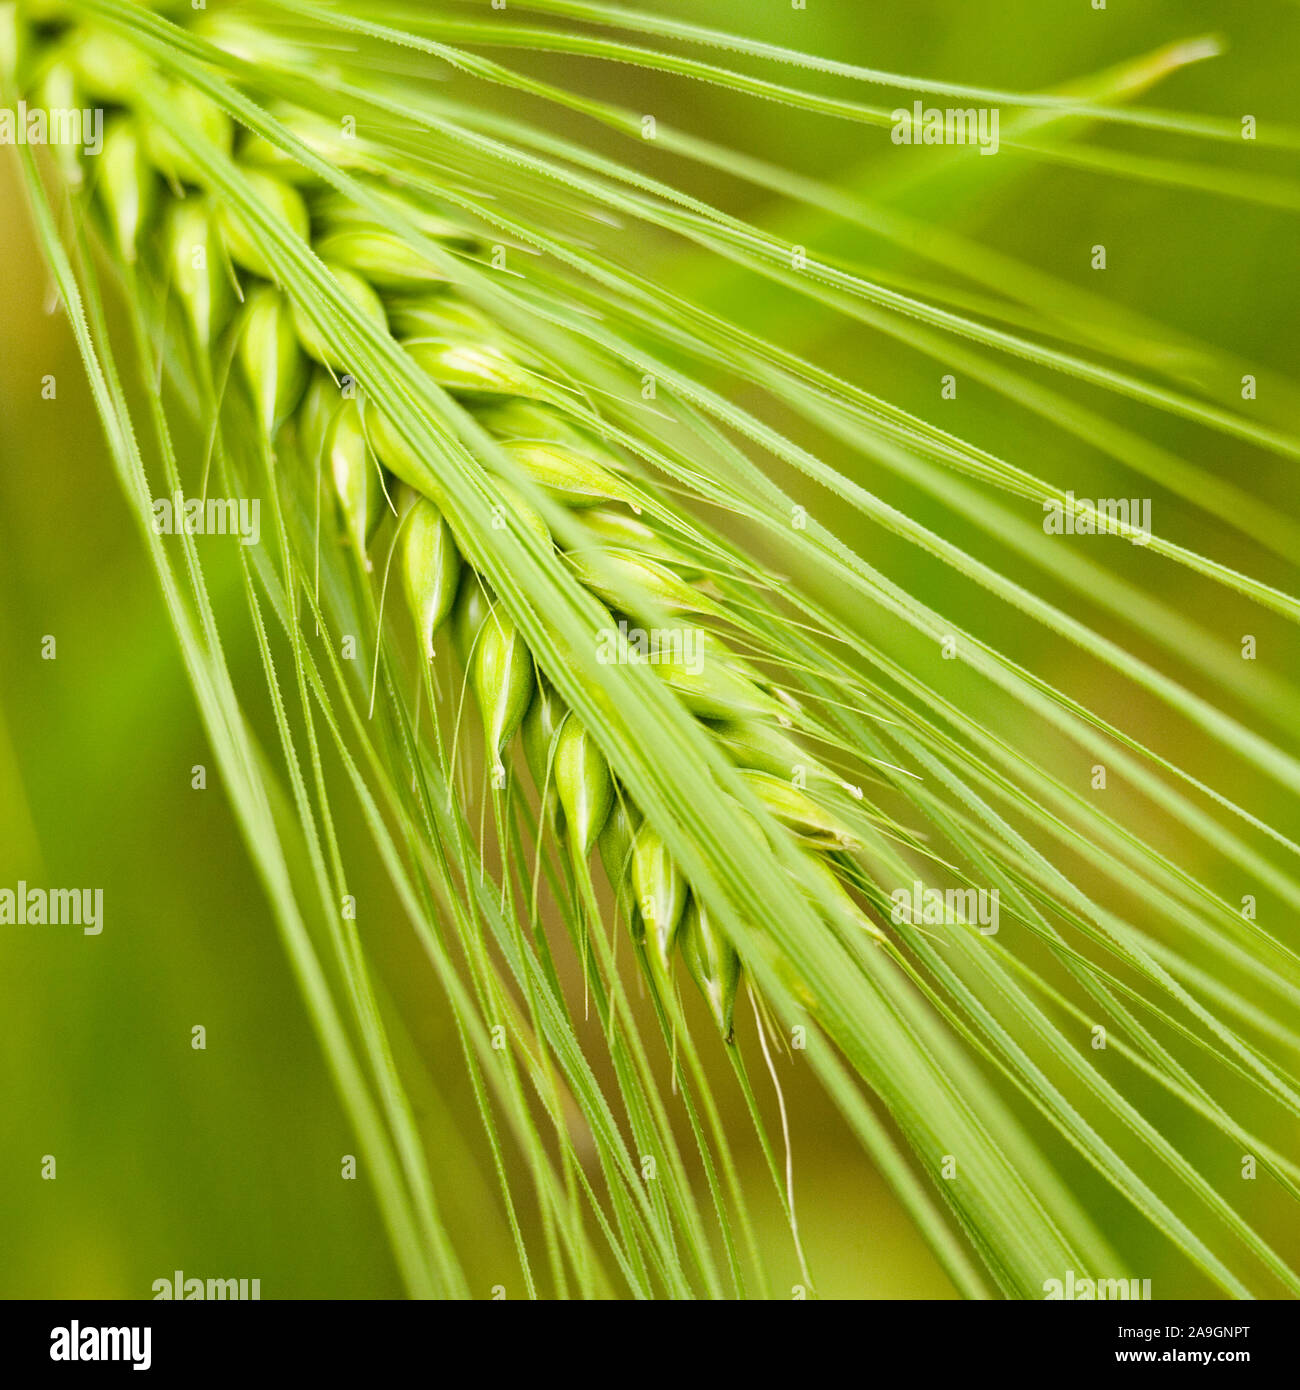 Getreideähre - Gerste Stock Photo